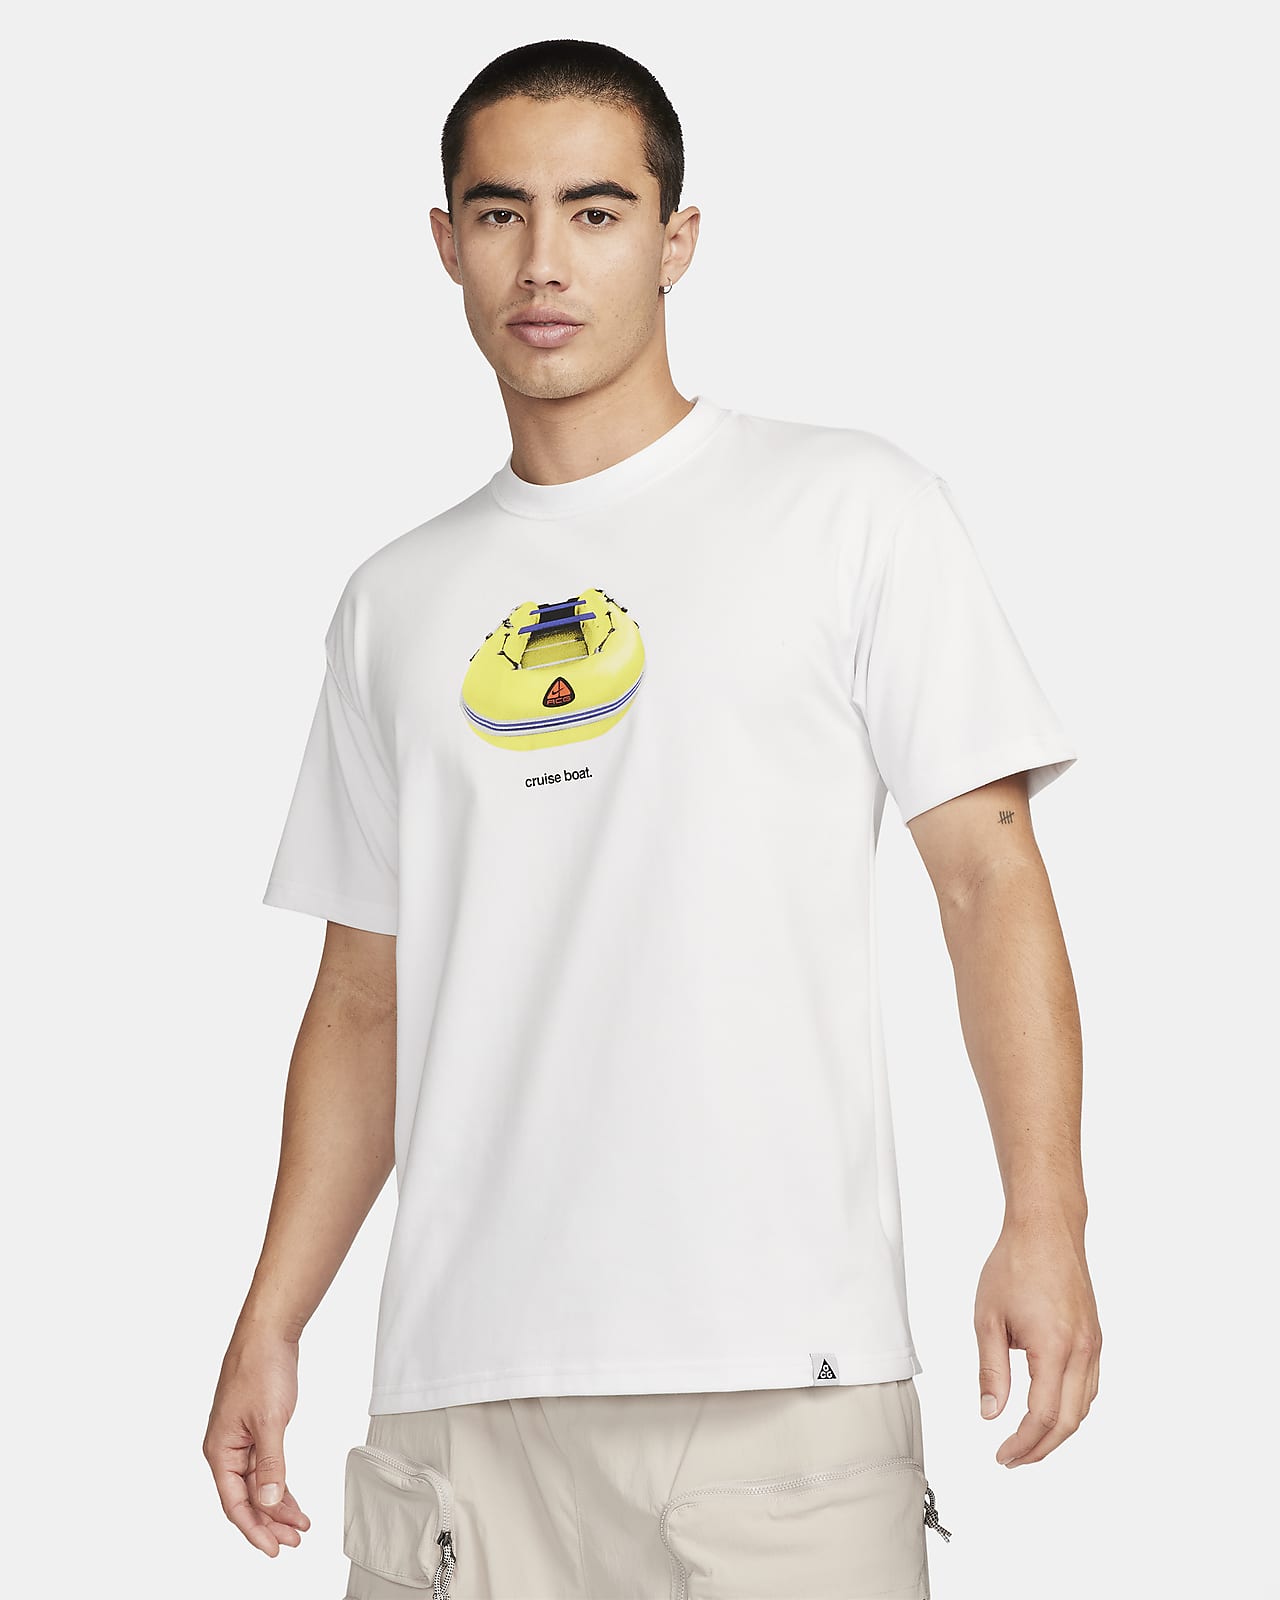 Nike ACG "Cruise Boat" Men's Dri-FIT T-Shirt